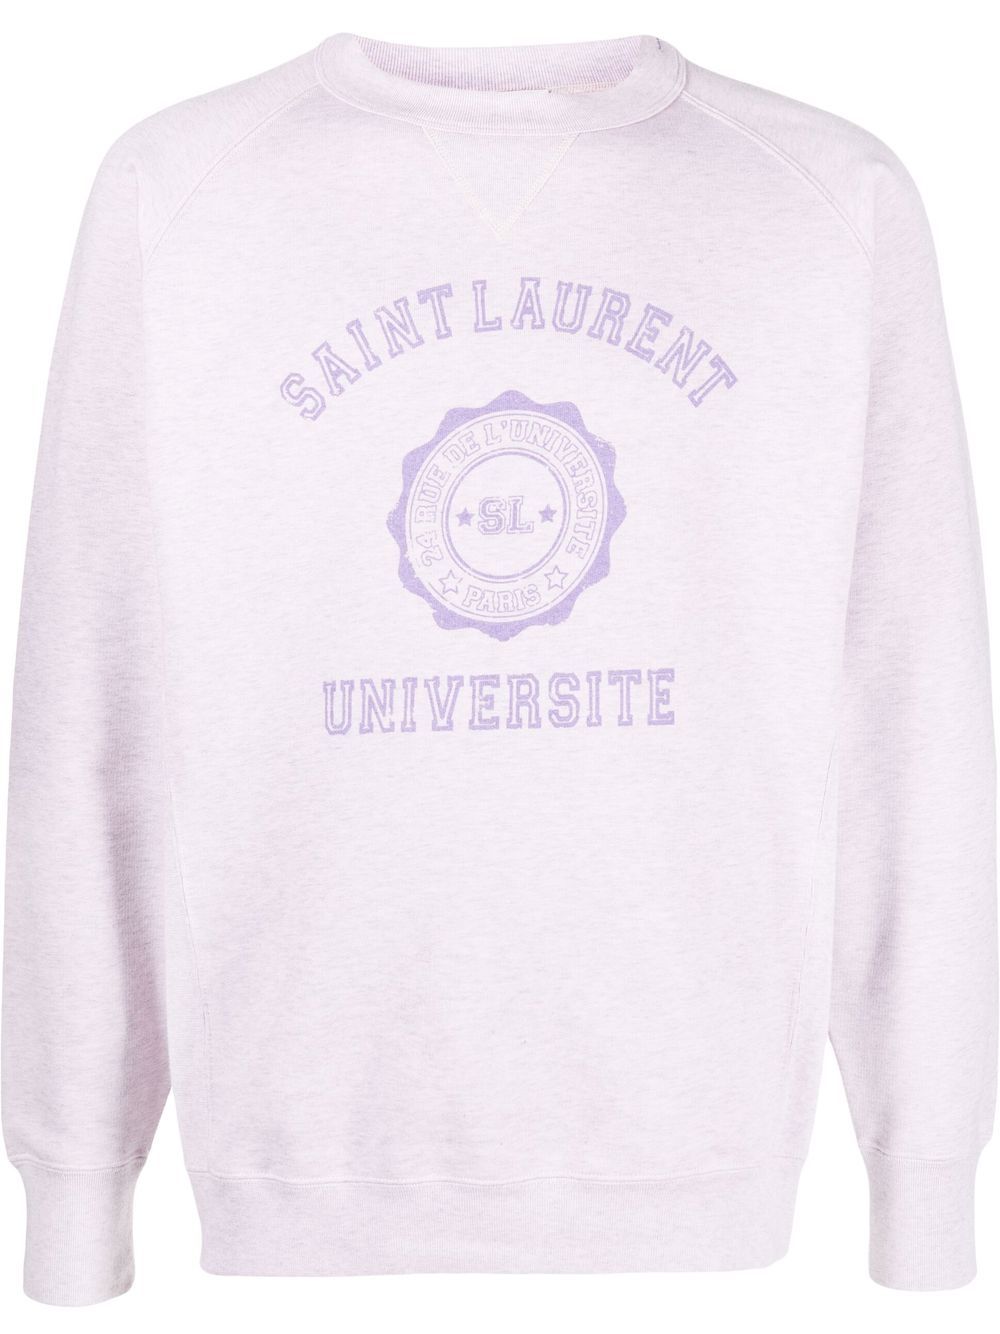 Université crew neck sweatshirt